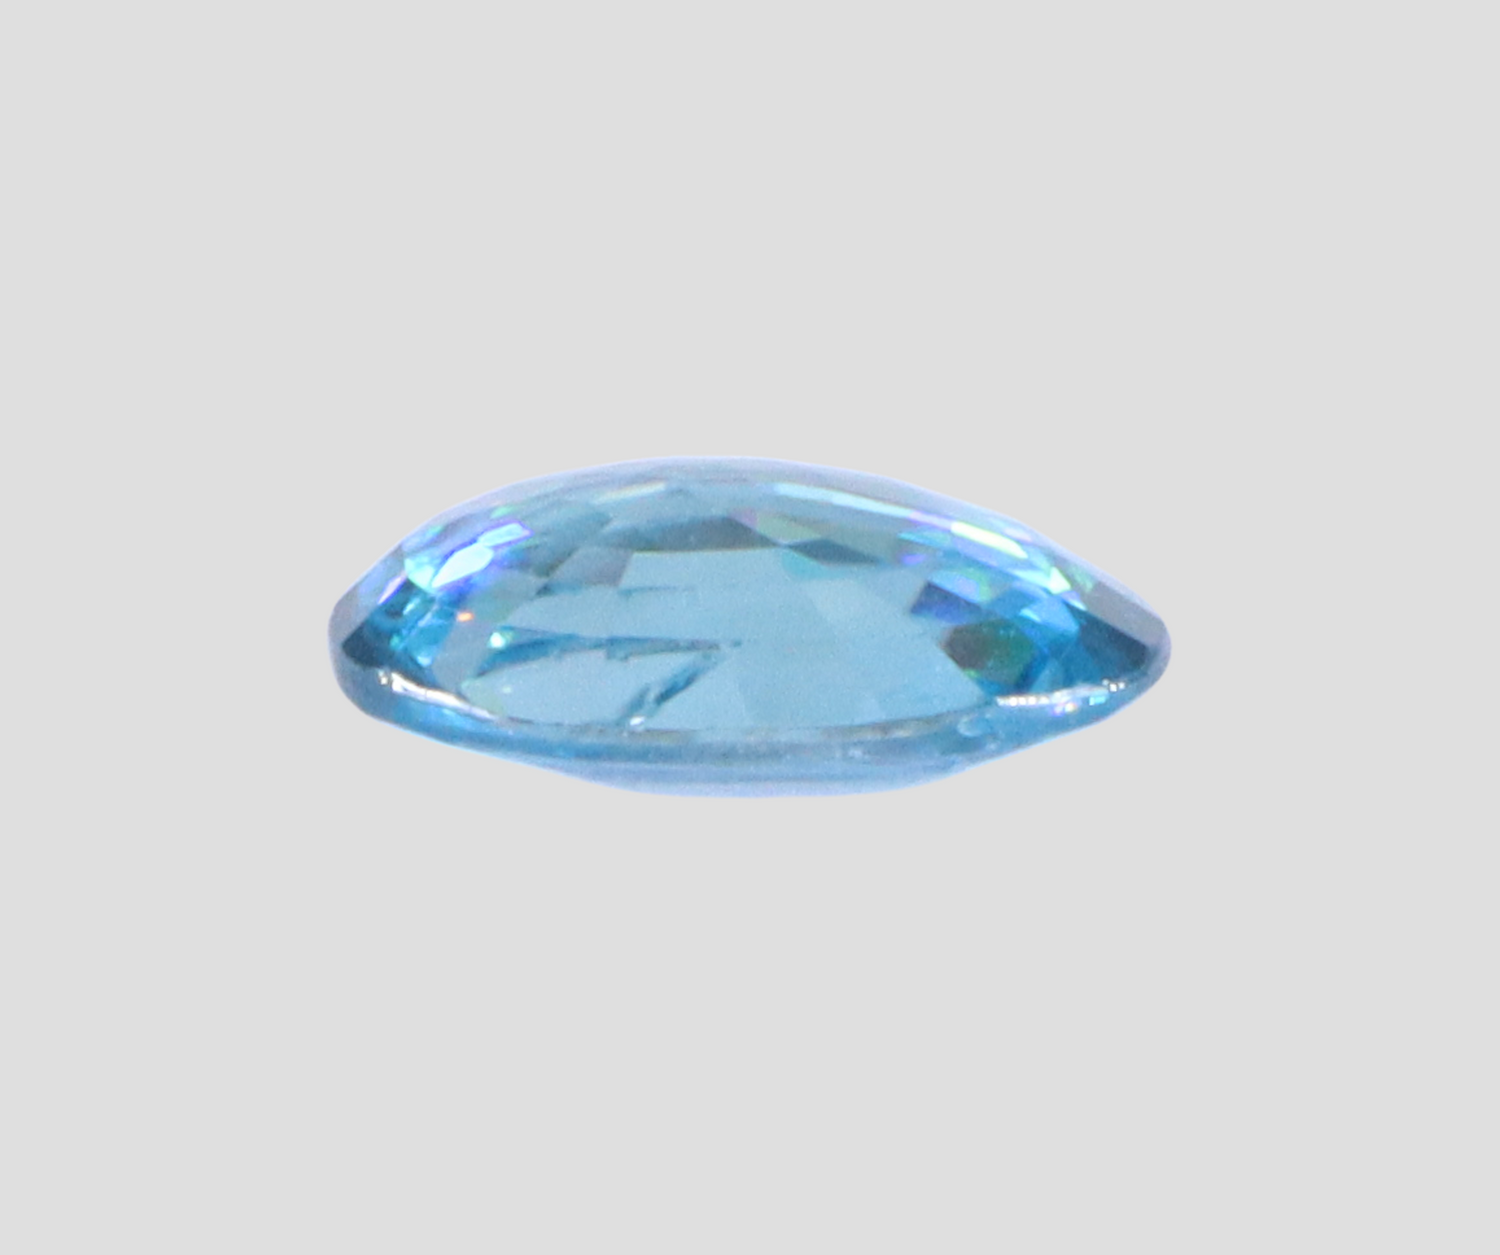 Blue Zircon - 6.89 Carats